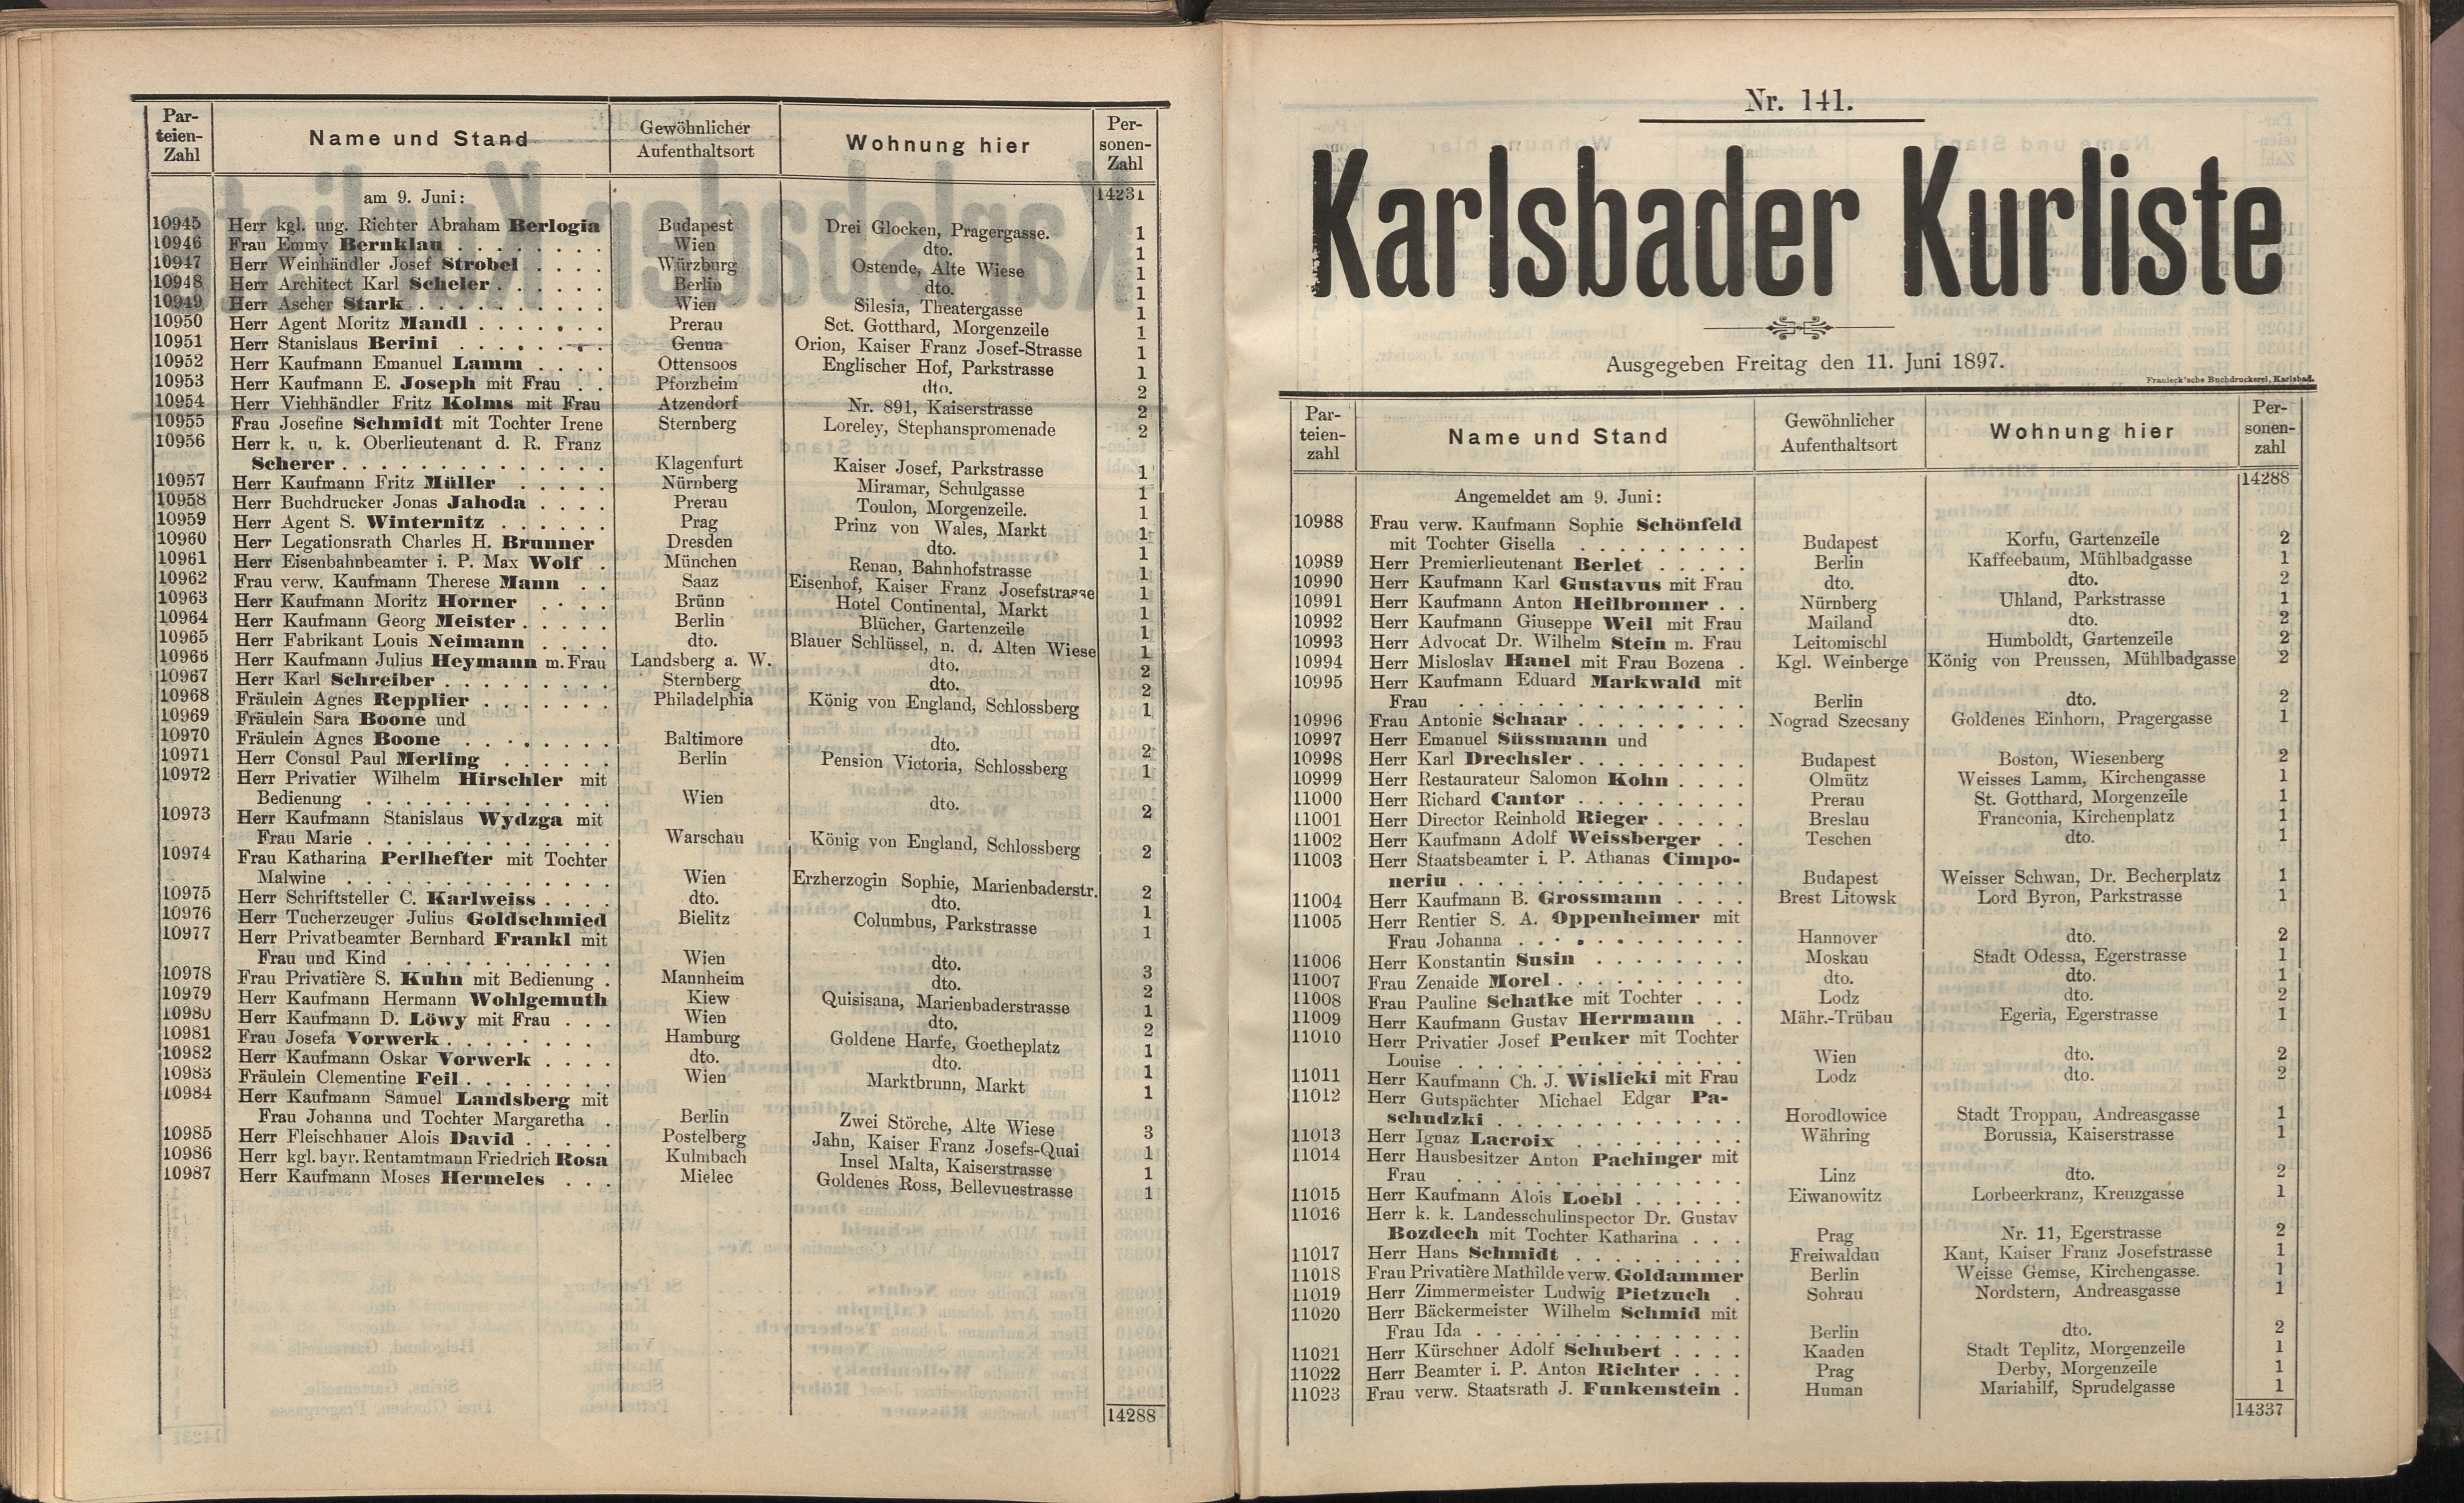 157. soap-kv_knihovna_karlsbader-kurliste-1897_1580